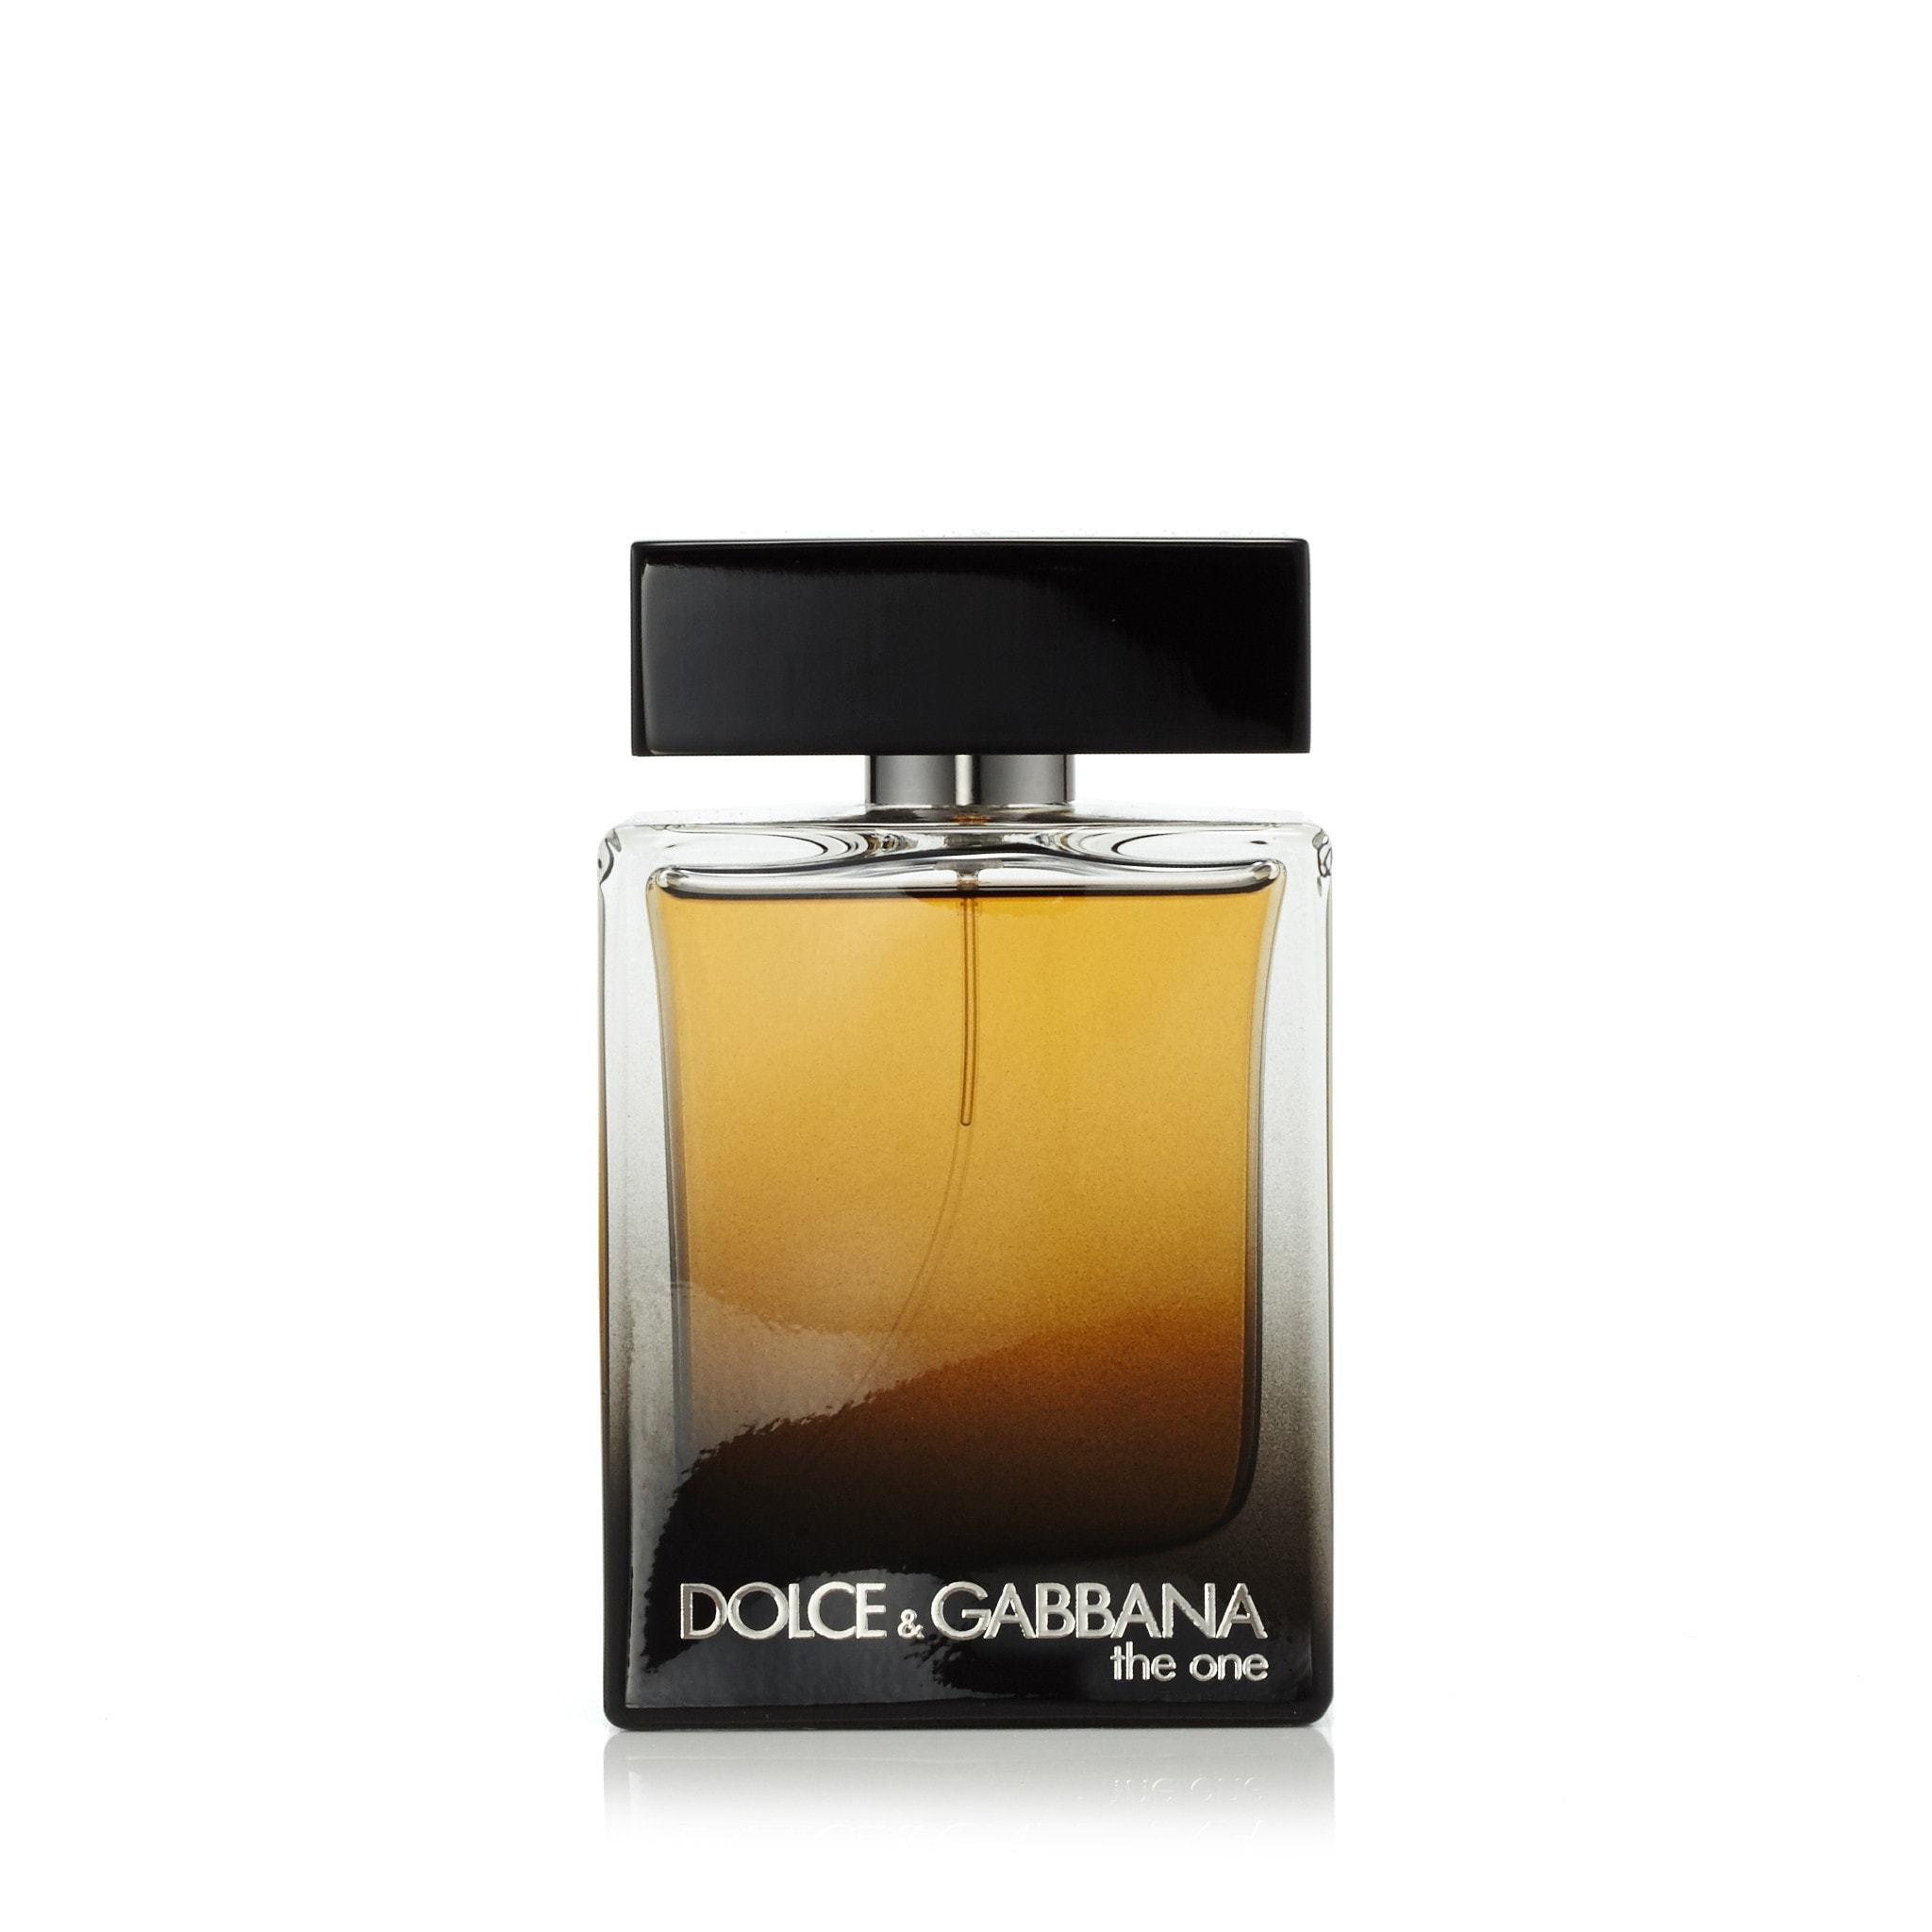 Dolce And Gabbana Light Blue For Women Eau De Toilette – Perfumania